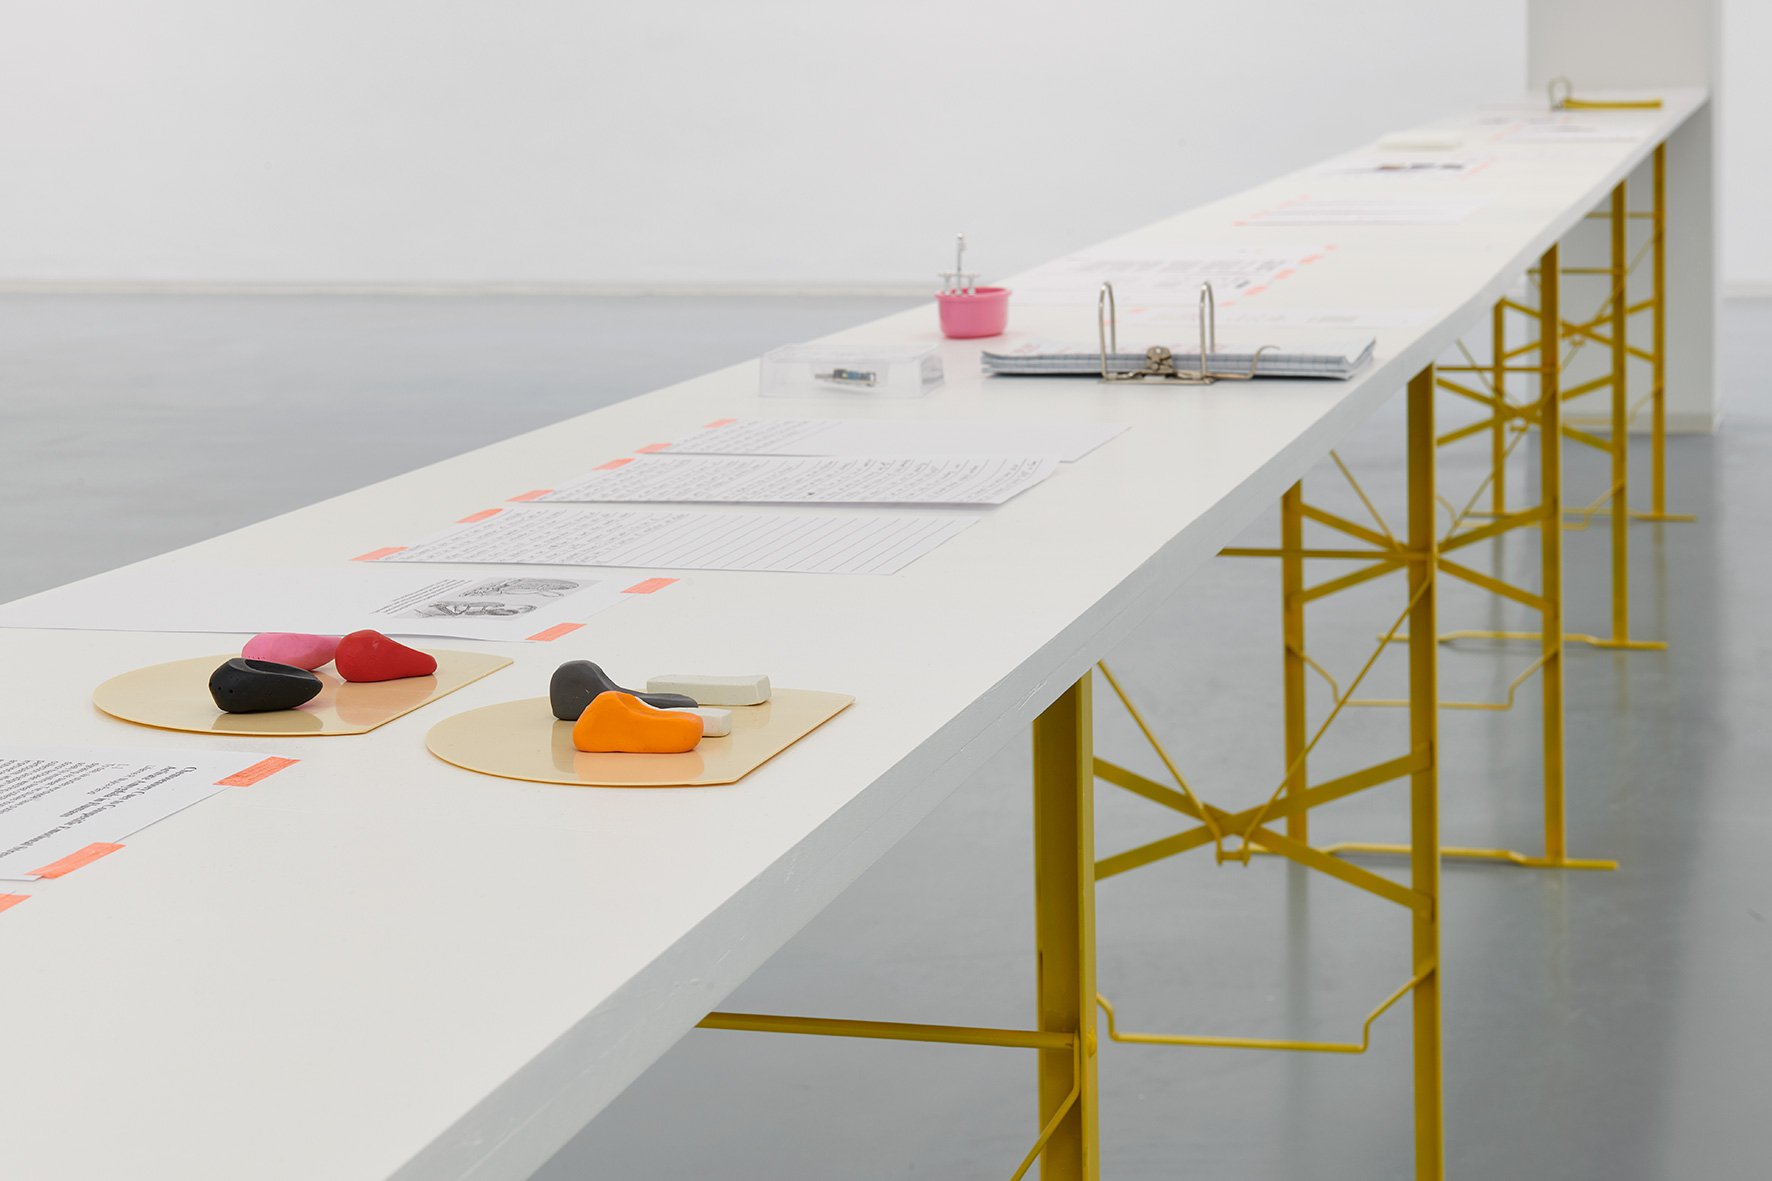 Stefani Glauber, installation view, 2019, Bonner Kunstverein, courtesy the artist. Photo: Mareike Tocha